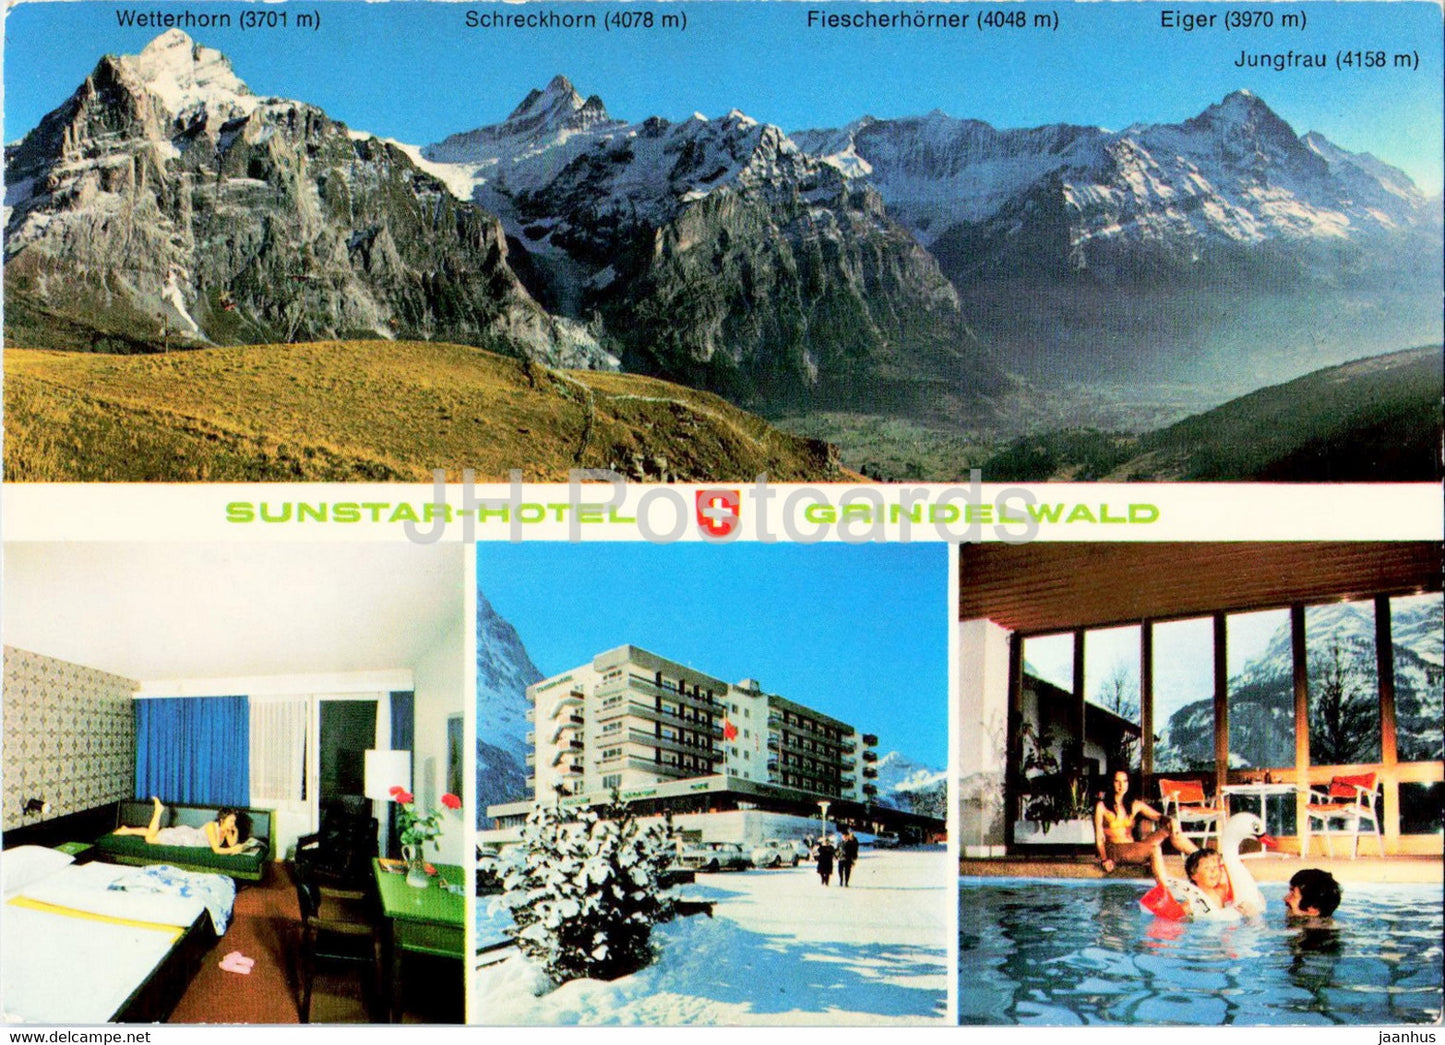 Sunstar Hotel Grindelwald - Switzerland - unused - JH Postcards